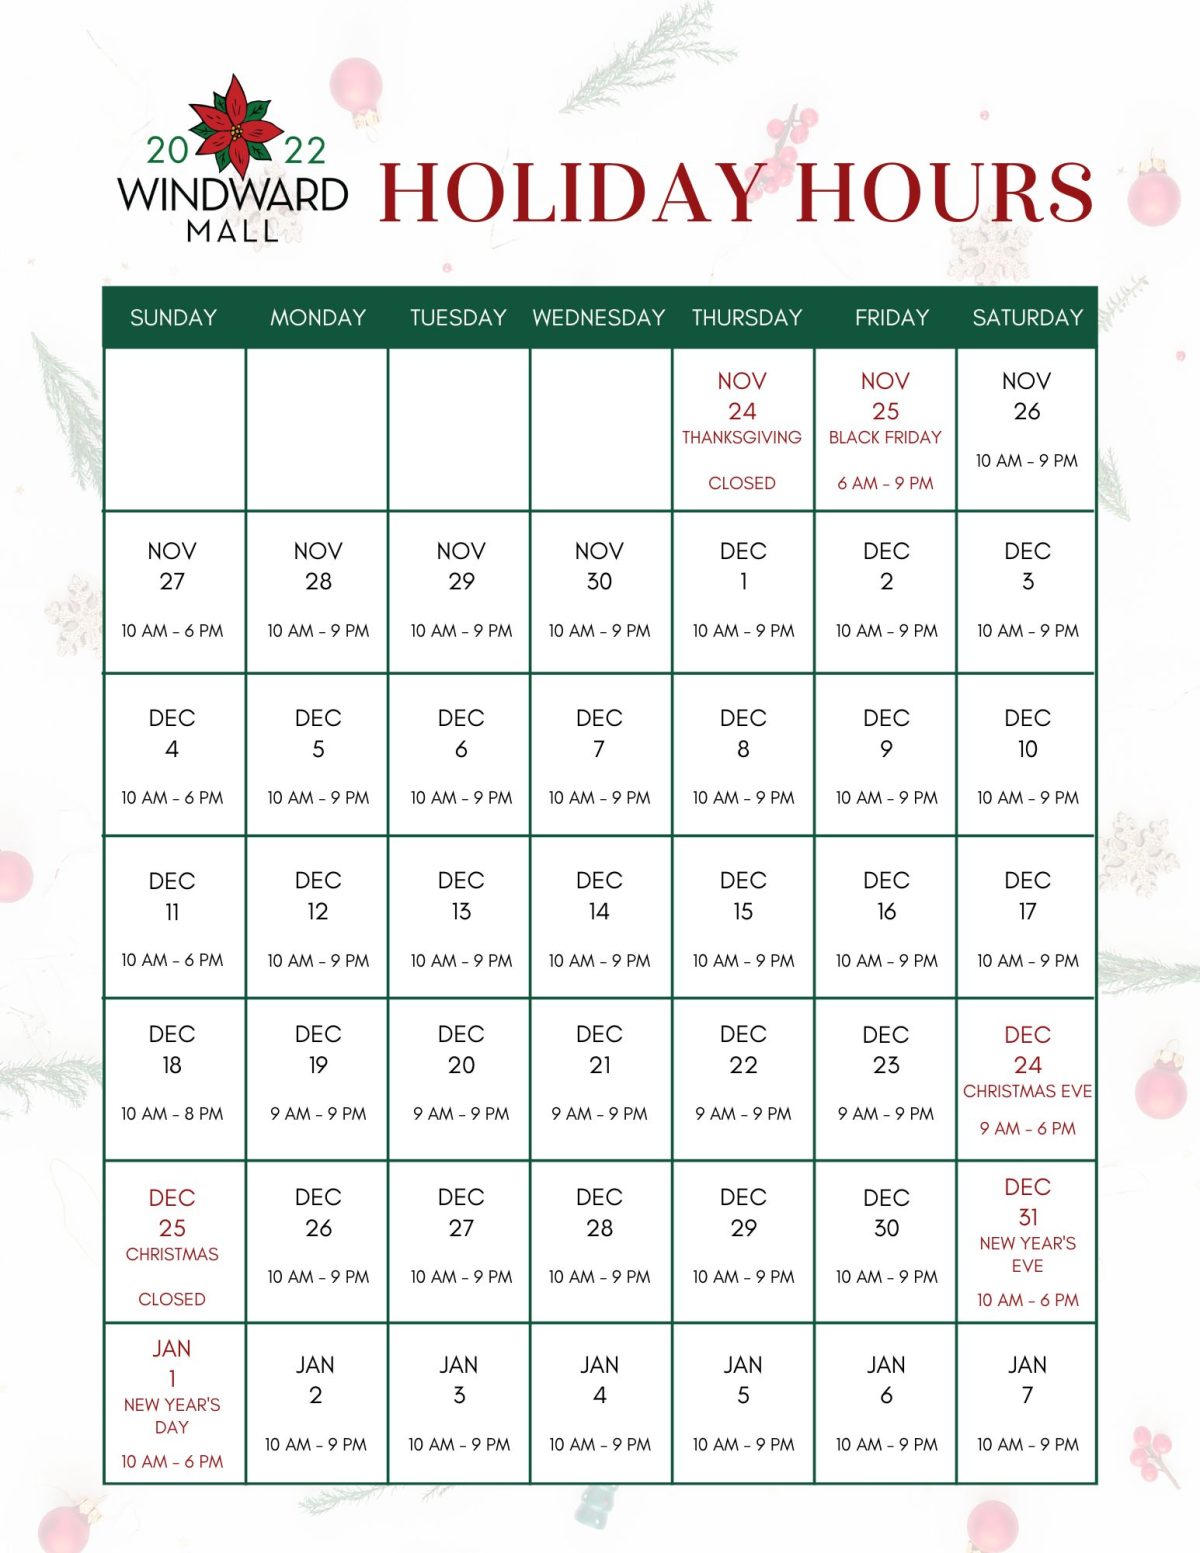 Holiday Hours Windward Mall